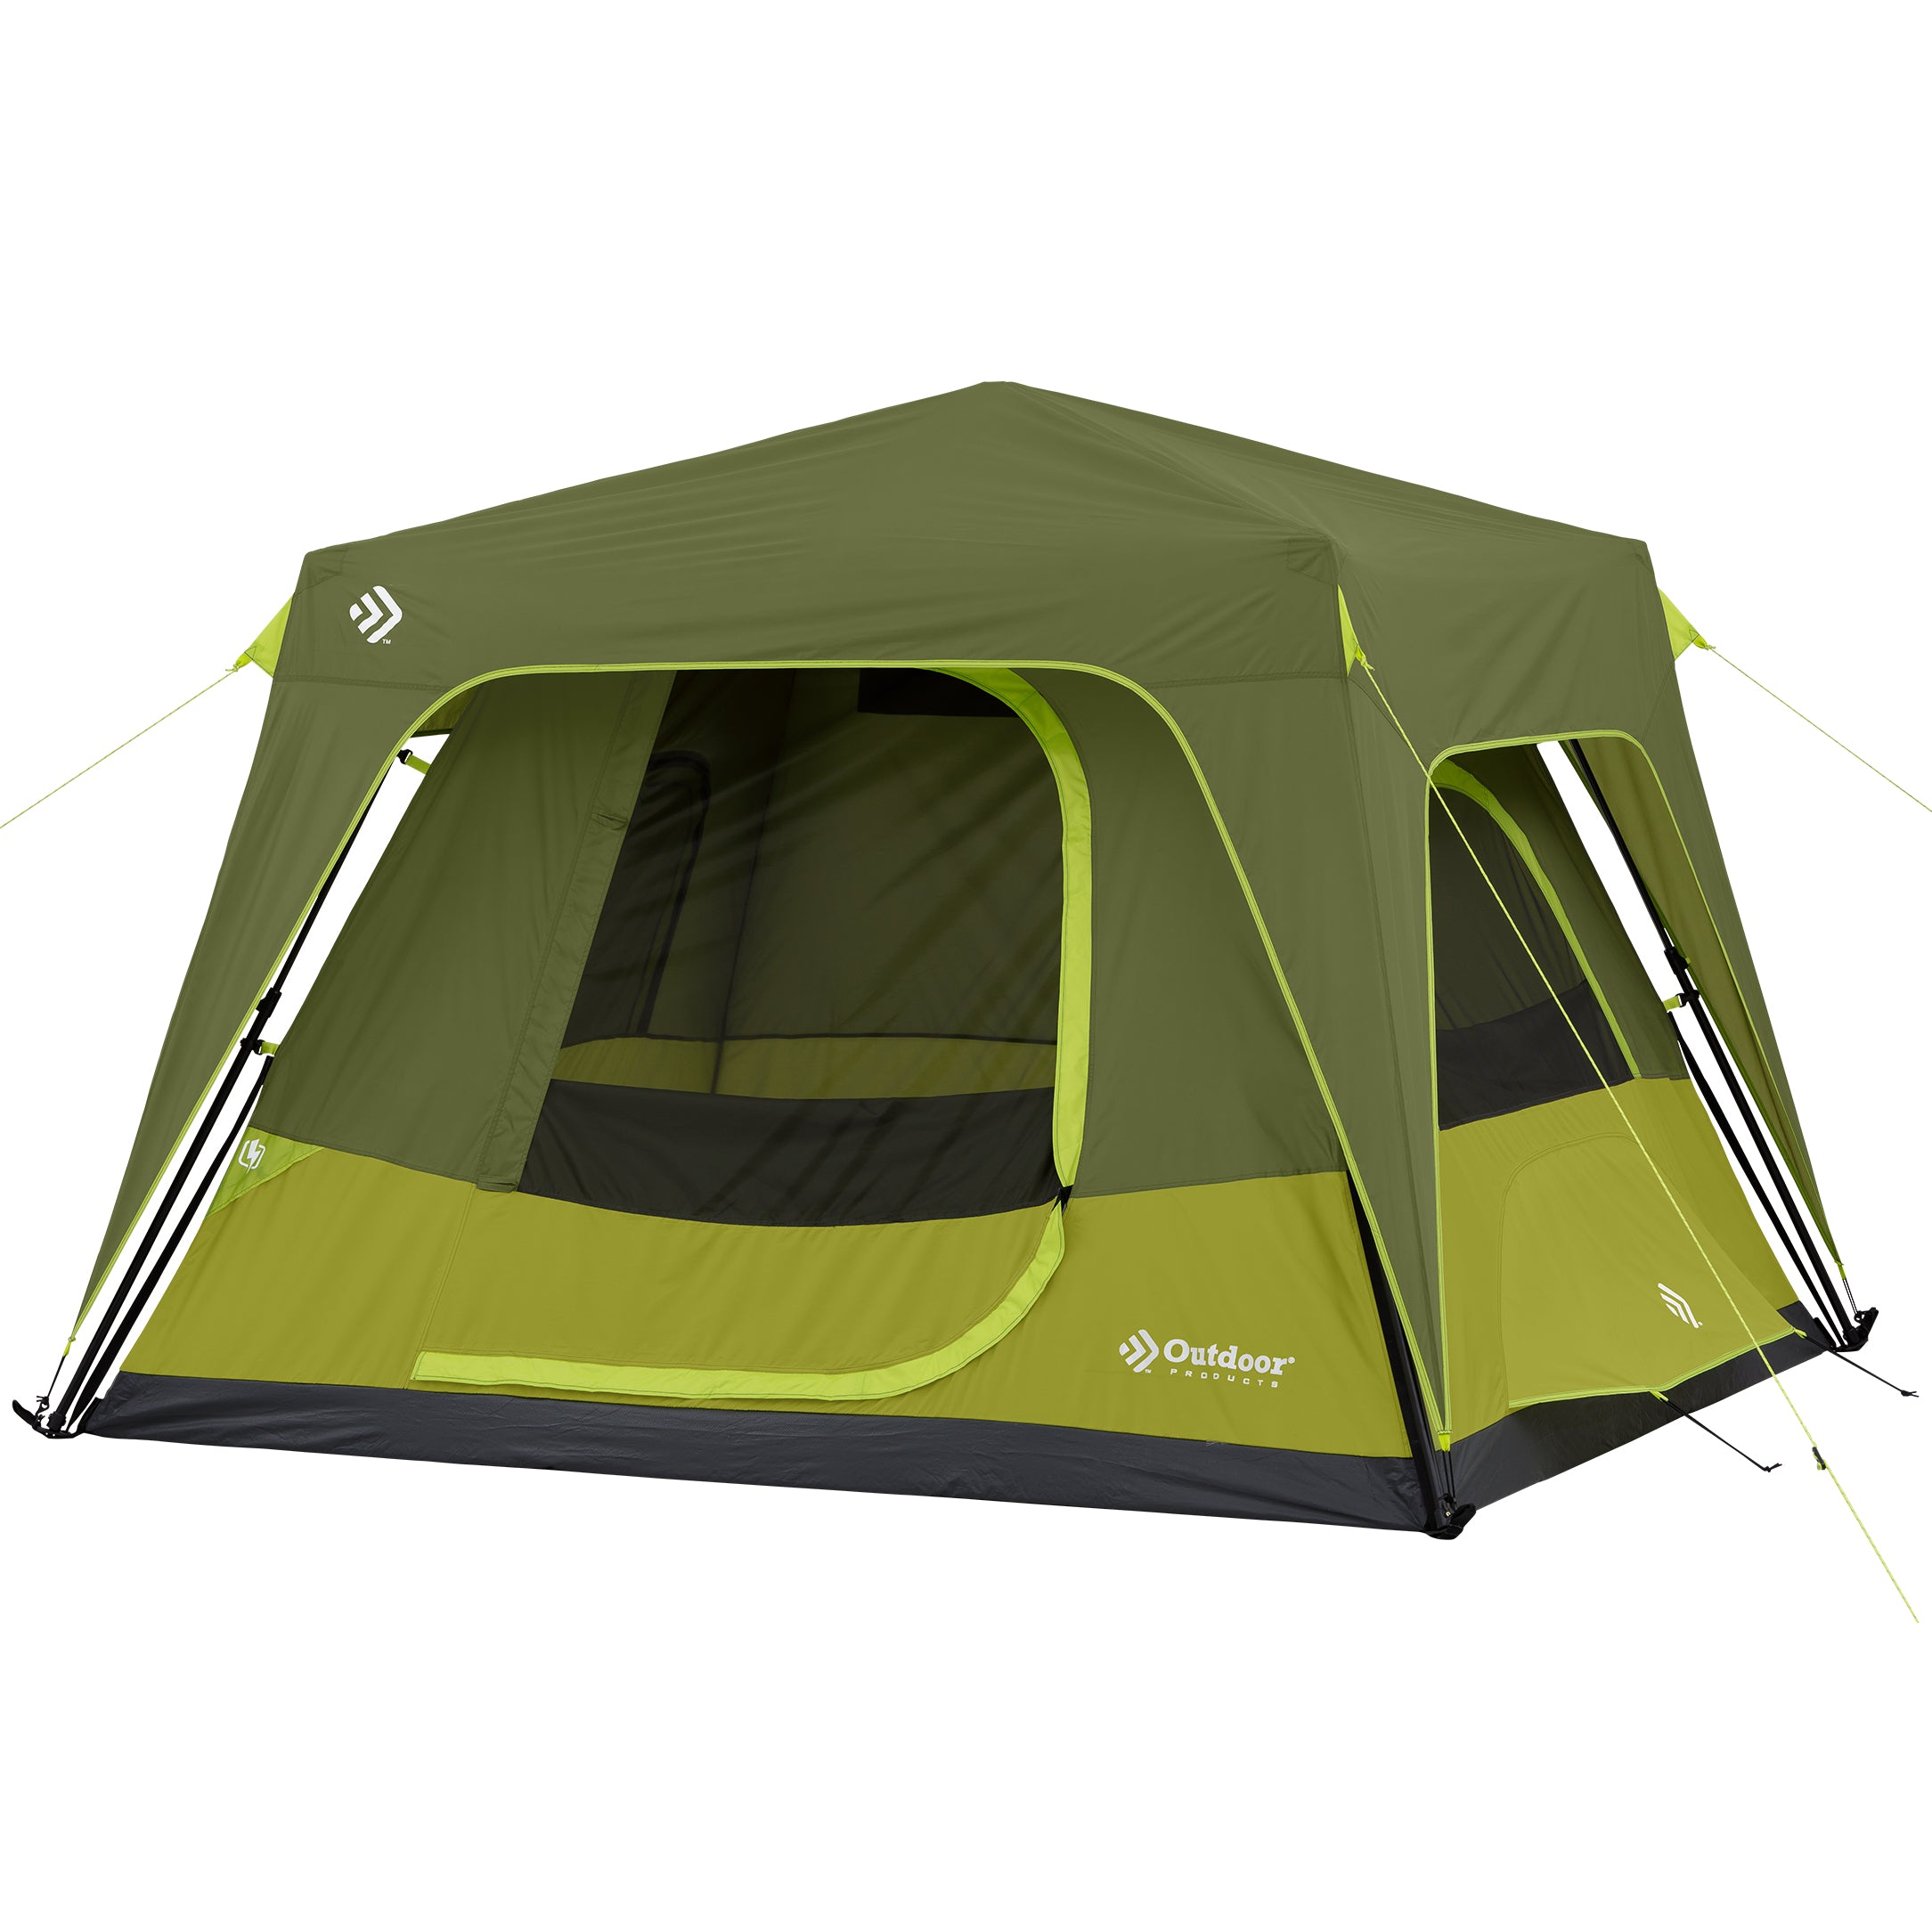 regeling zuiden Zeemeeuw 4 Person Instant Cabin Tent | Outdoor Products – Outdoor Products - Camping